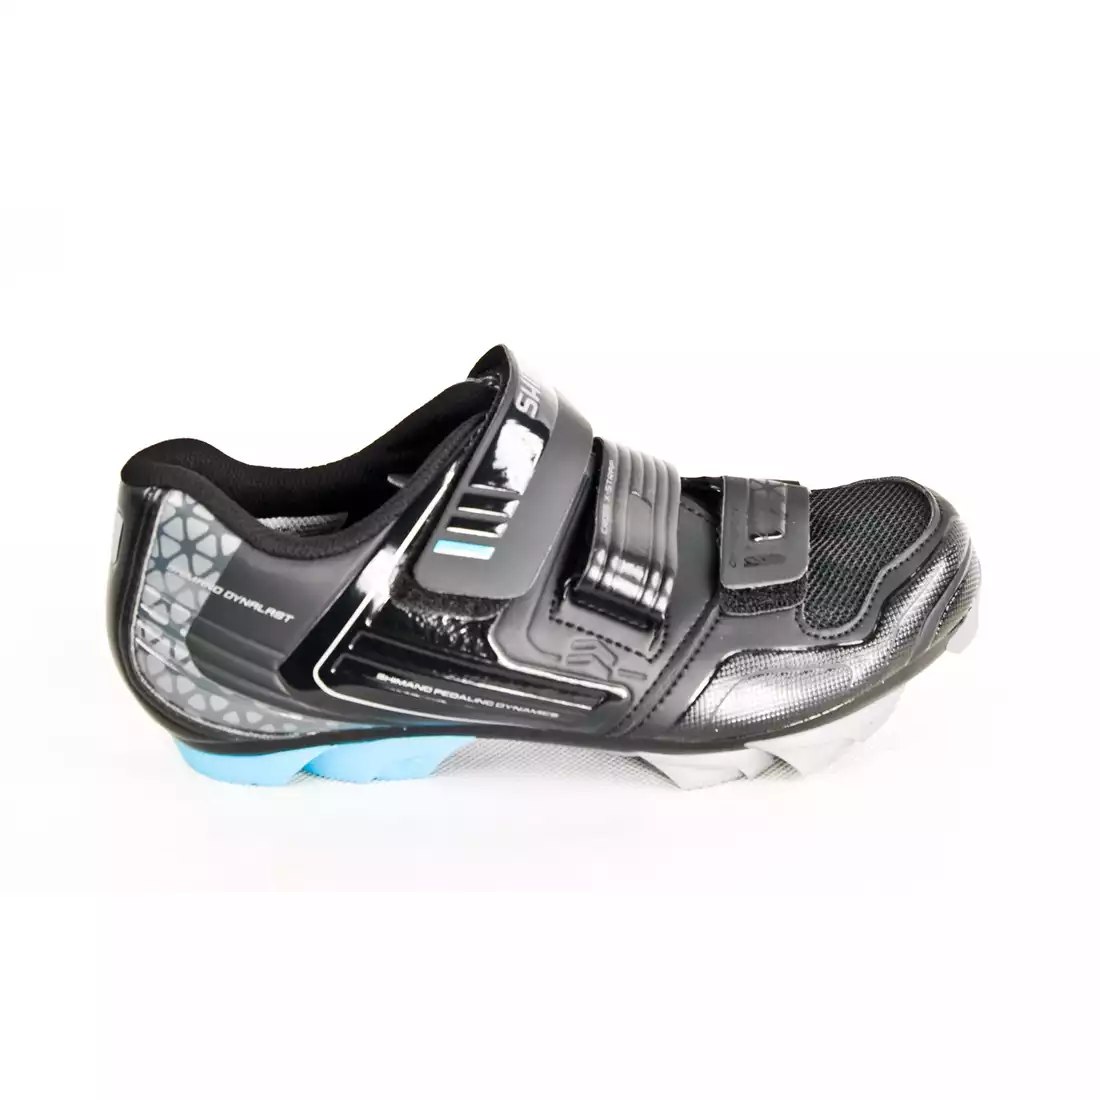 SHIMANO SHWM53L - damskie buty rowerowe MTB, czarne